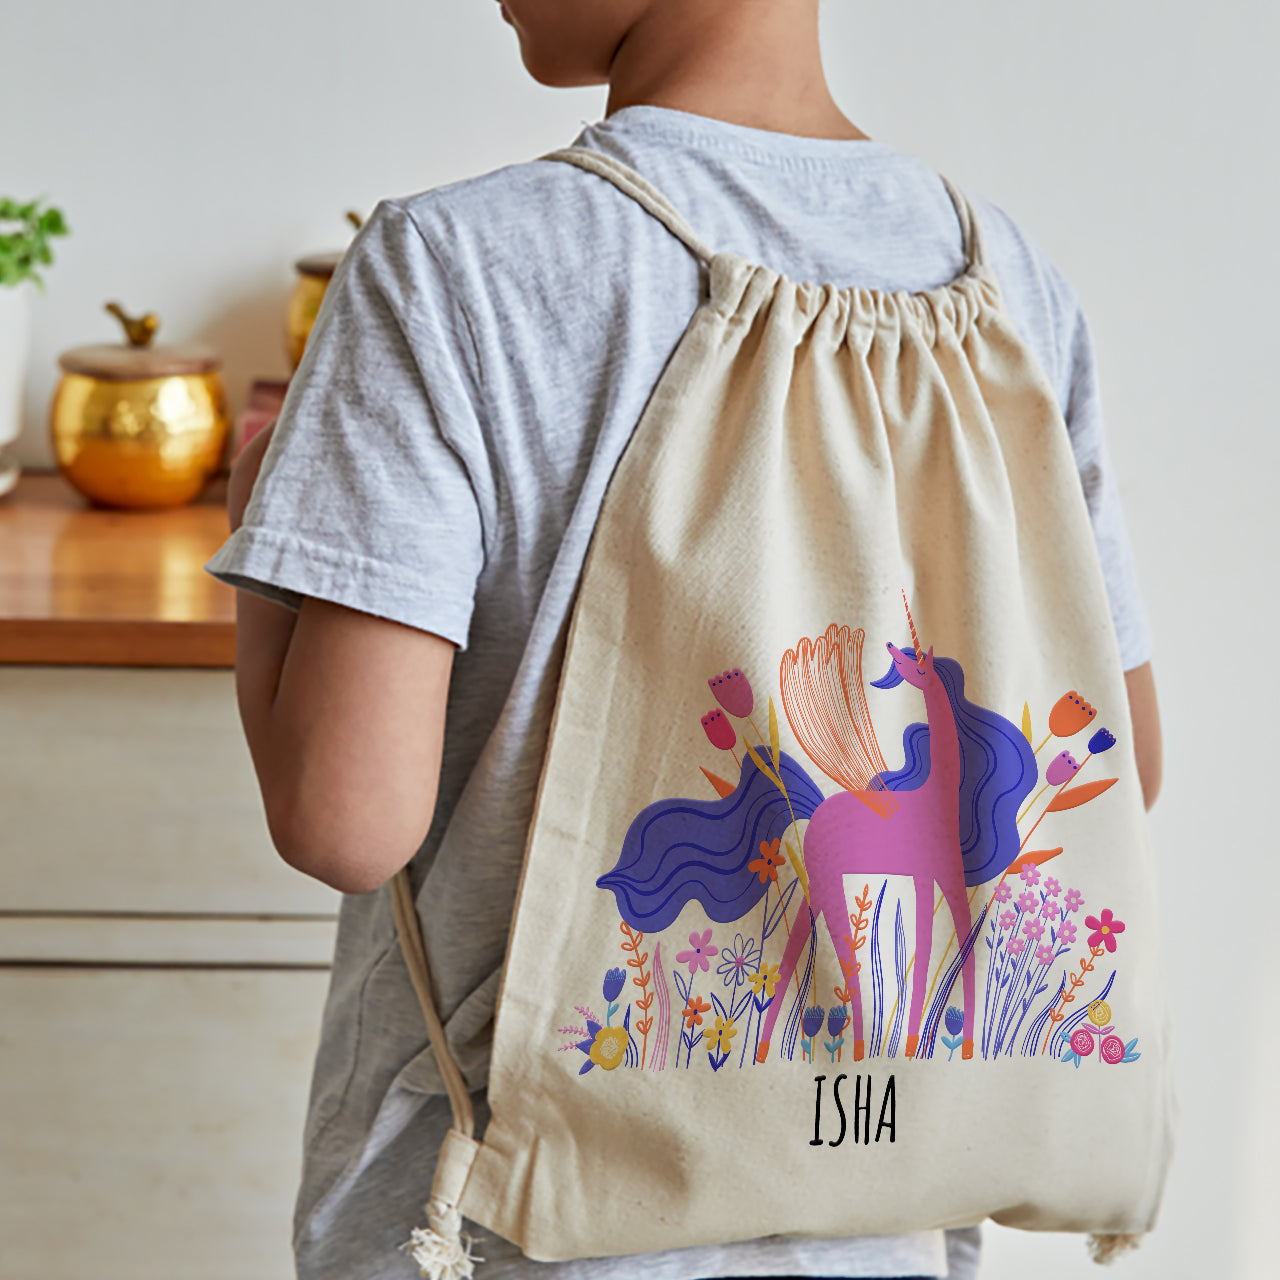 Personalised Drawstring Bag - Magical Unicorn